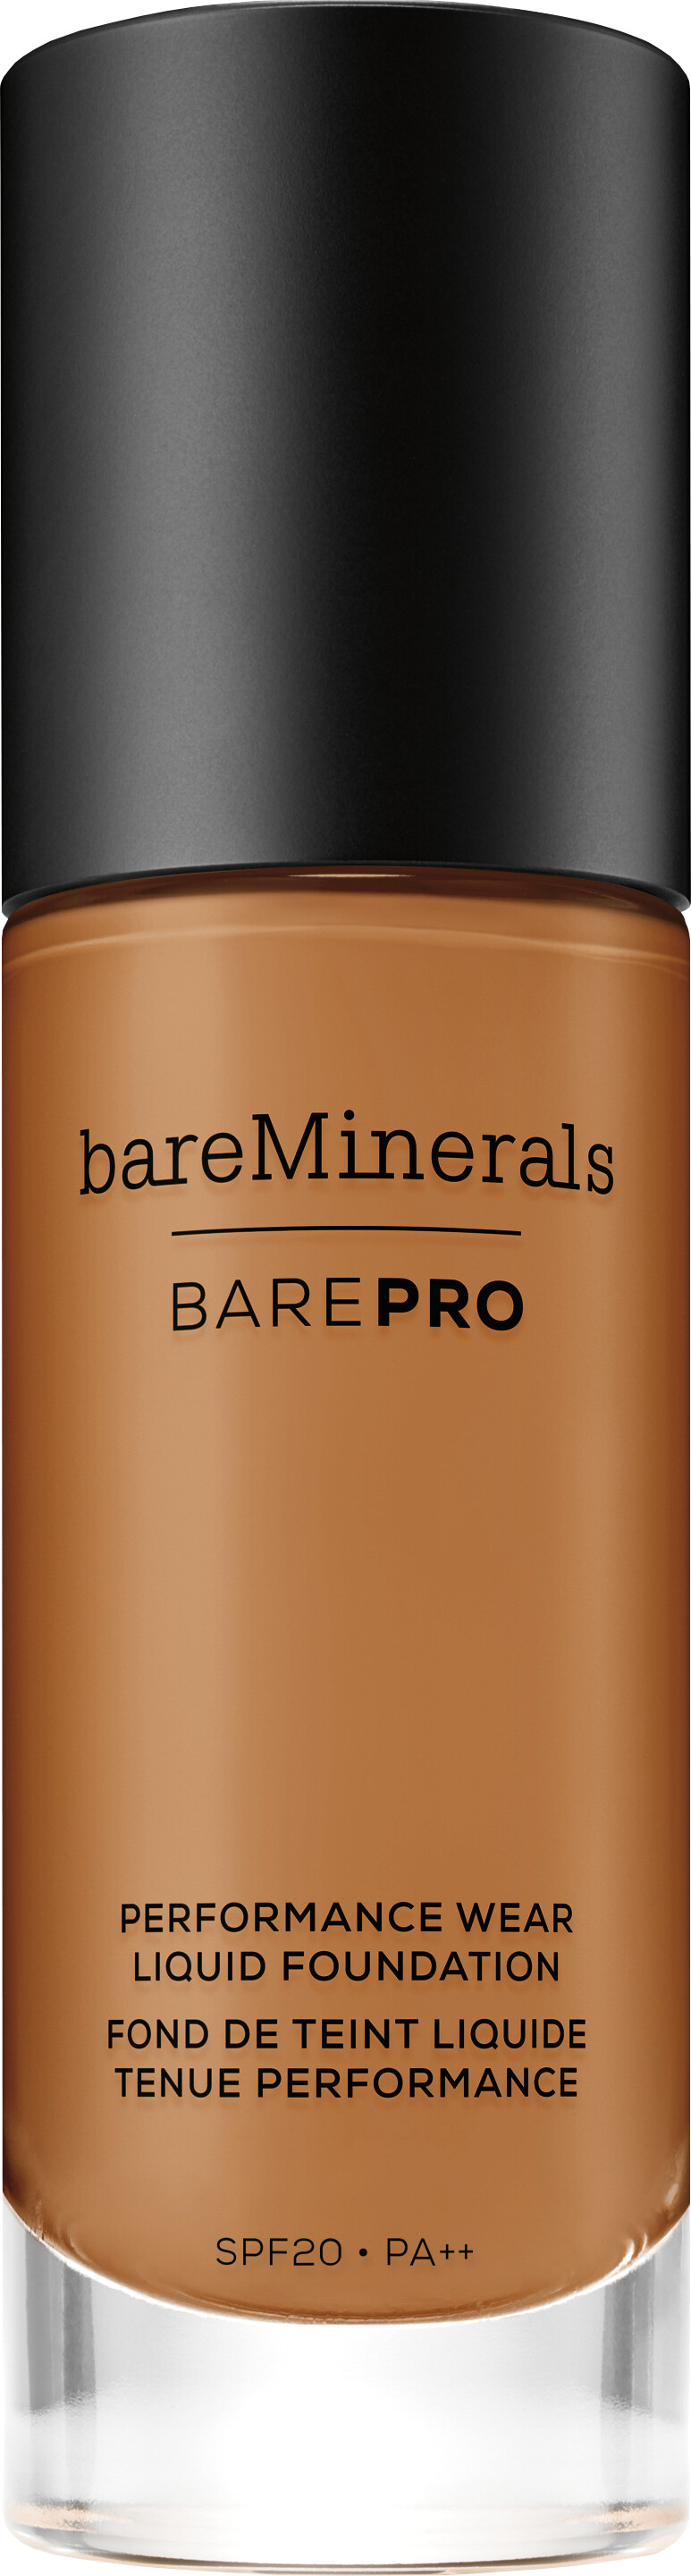 bareMinerals BAREPRO Performance Wear Liquid Foundation SPF20 30ml 23 - Walnut